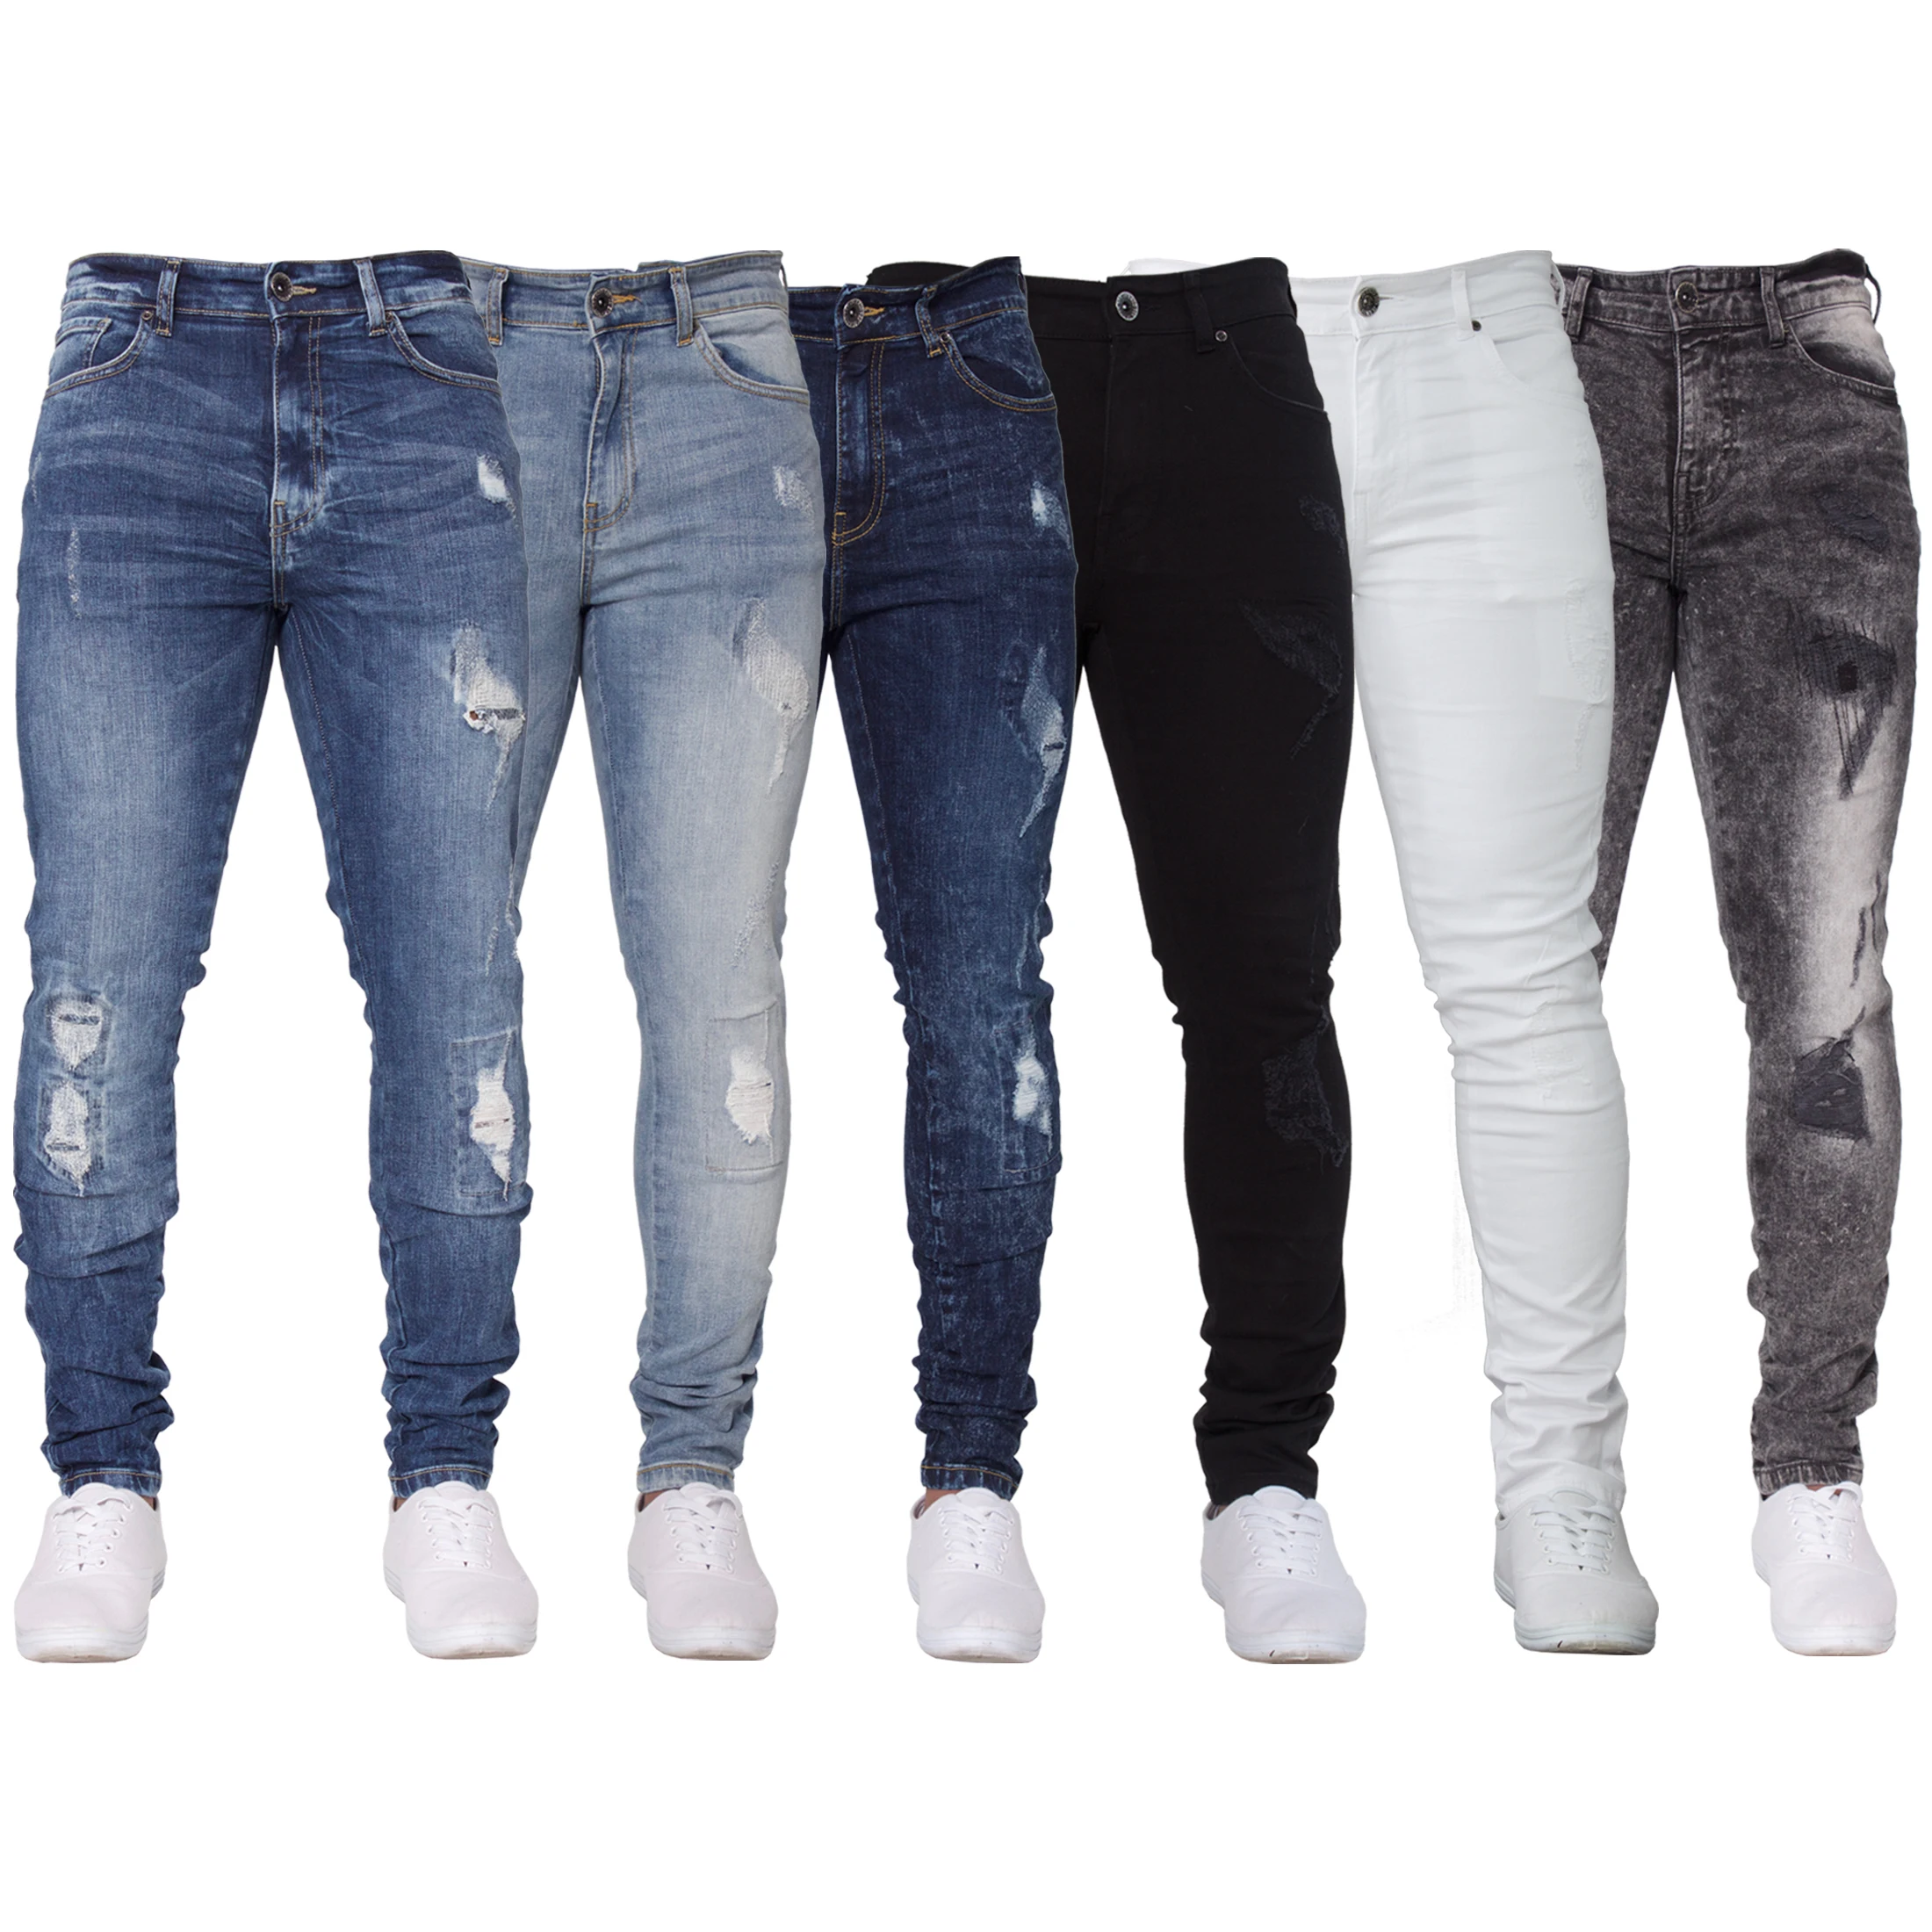 mr price mens jeans